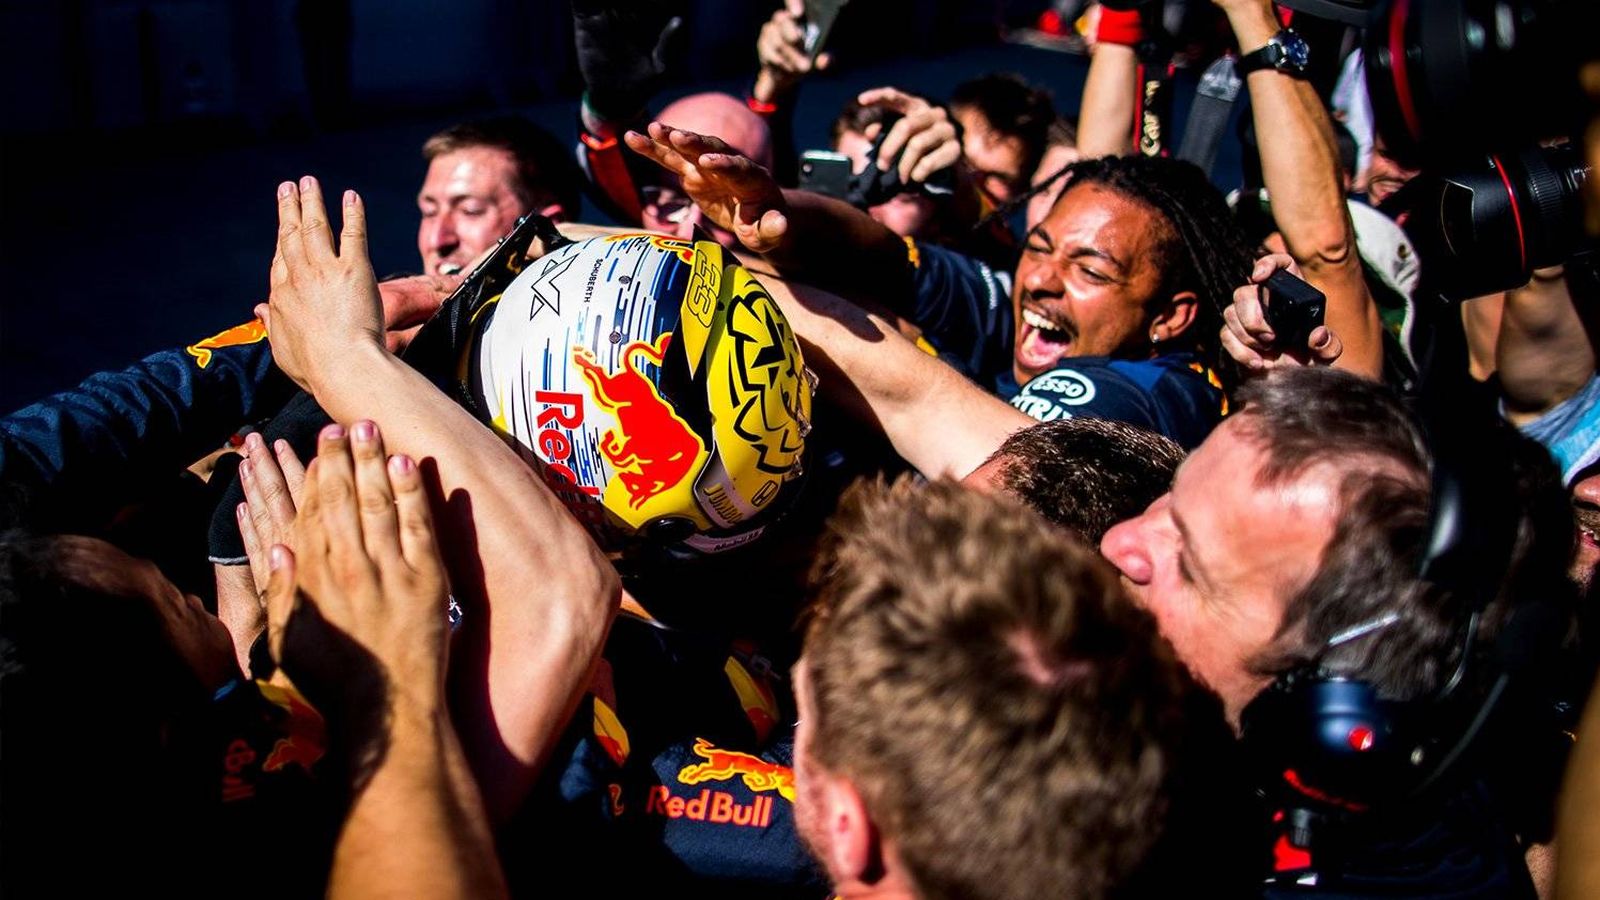 Foto: Max Verstappen celebrando su victoria en casa de Red Bull con sus mecánicos. (Red Bull Aston Martin)